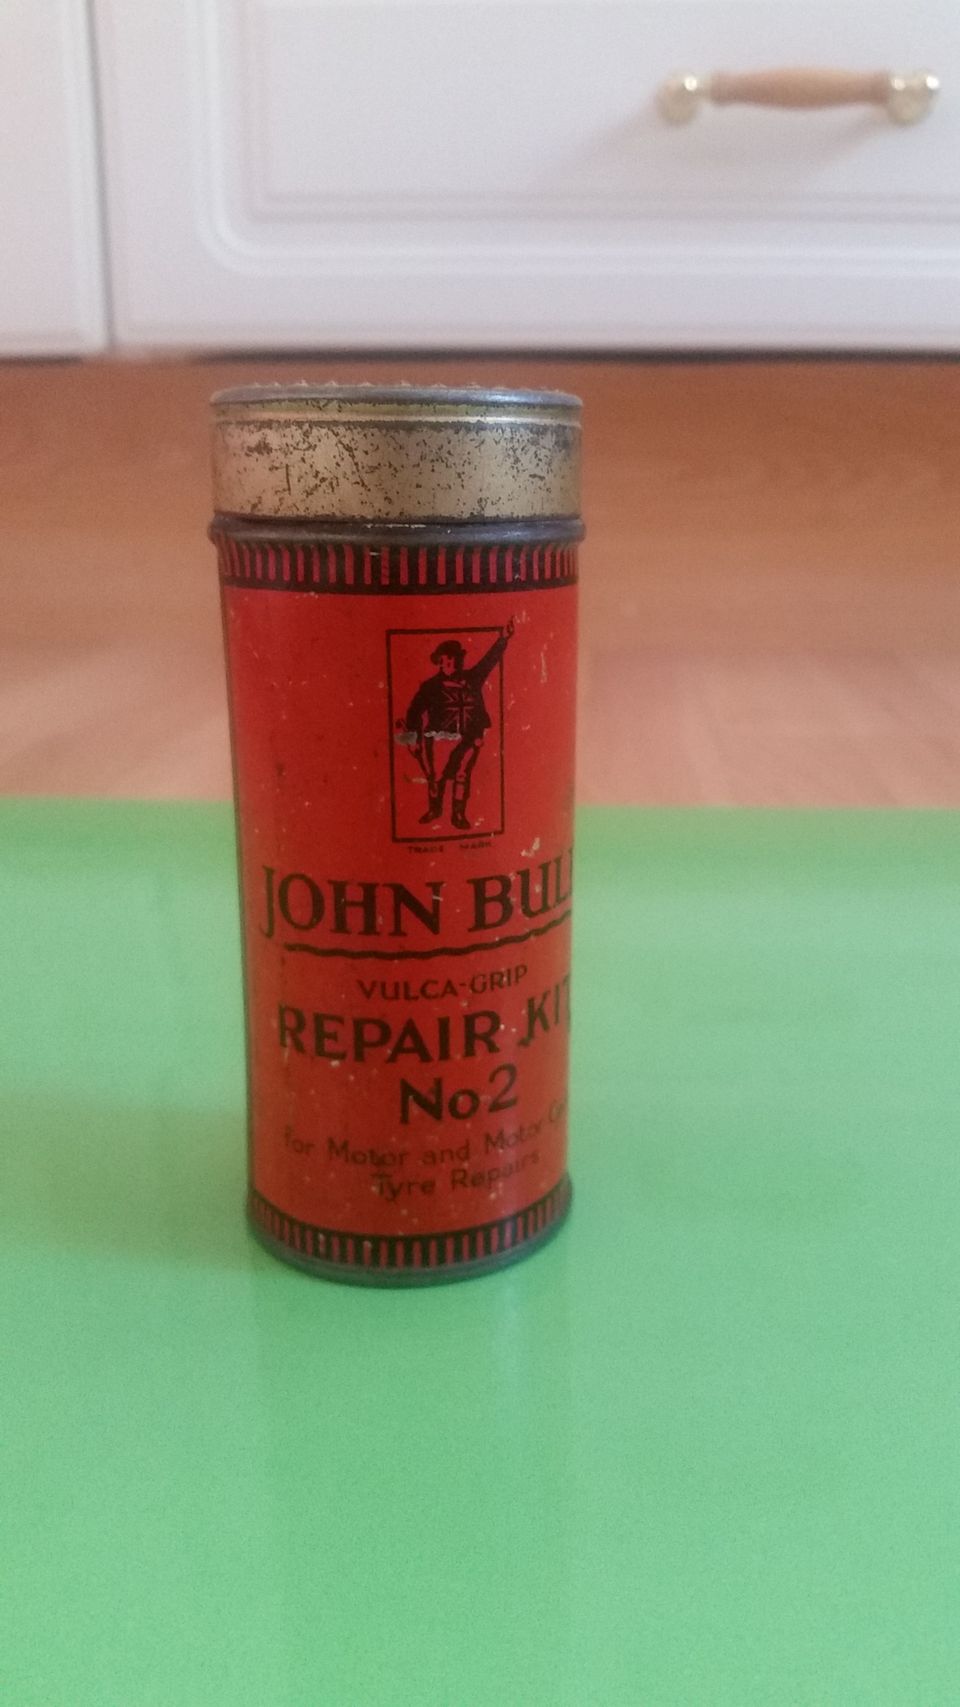 John Bull Vulca-Grip Repair Kit No.2 cylindrical Tin